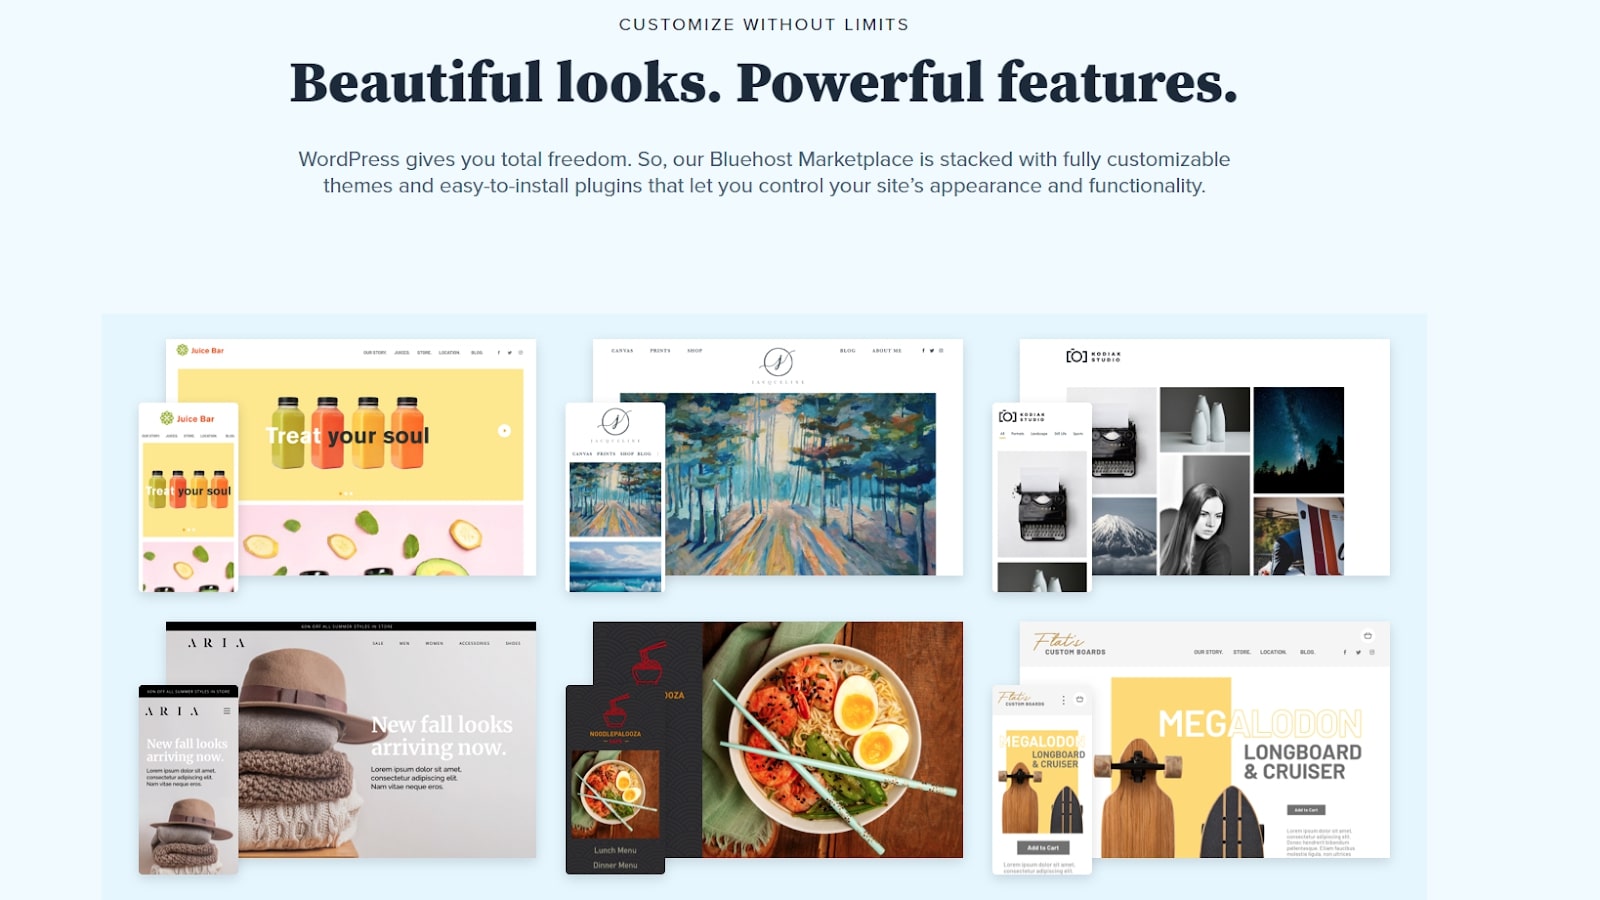 Bluehost's webpage advertising WordPress themes